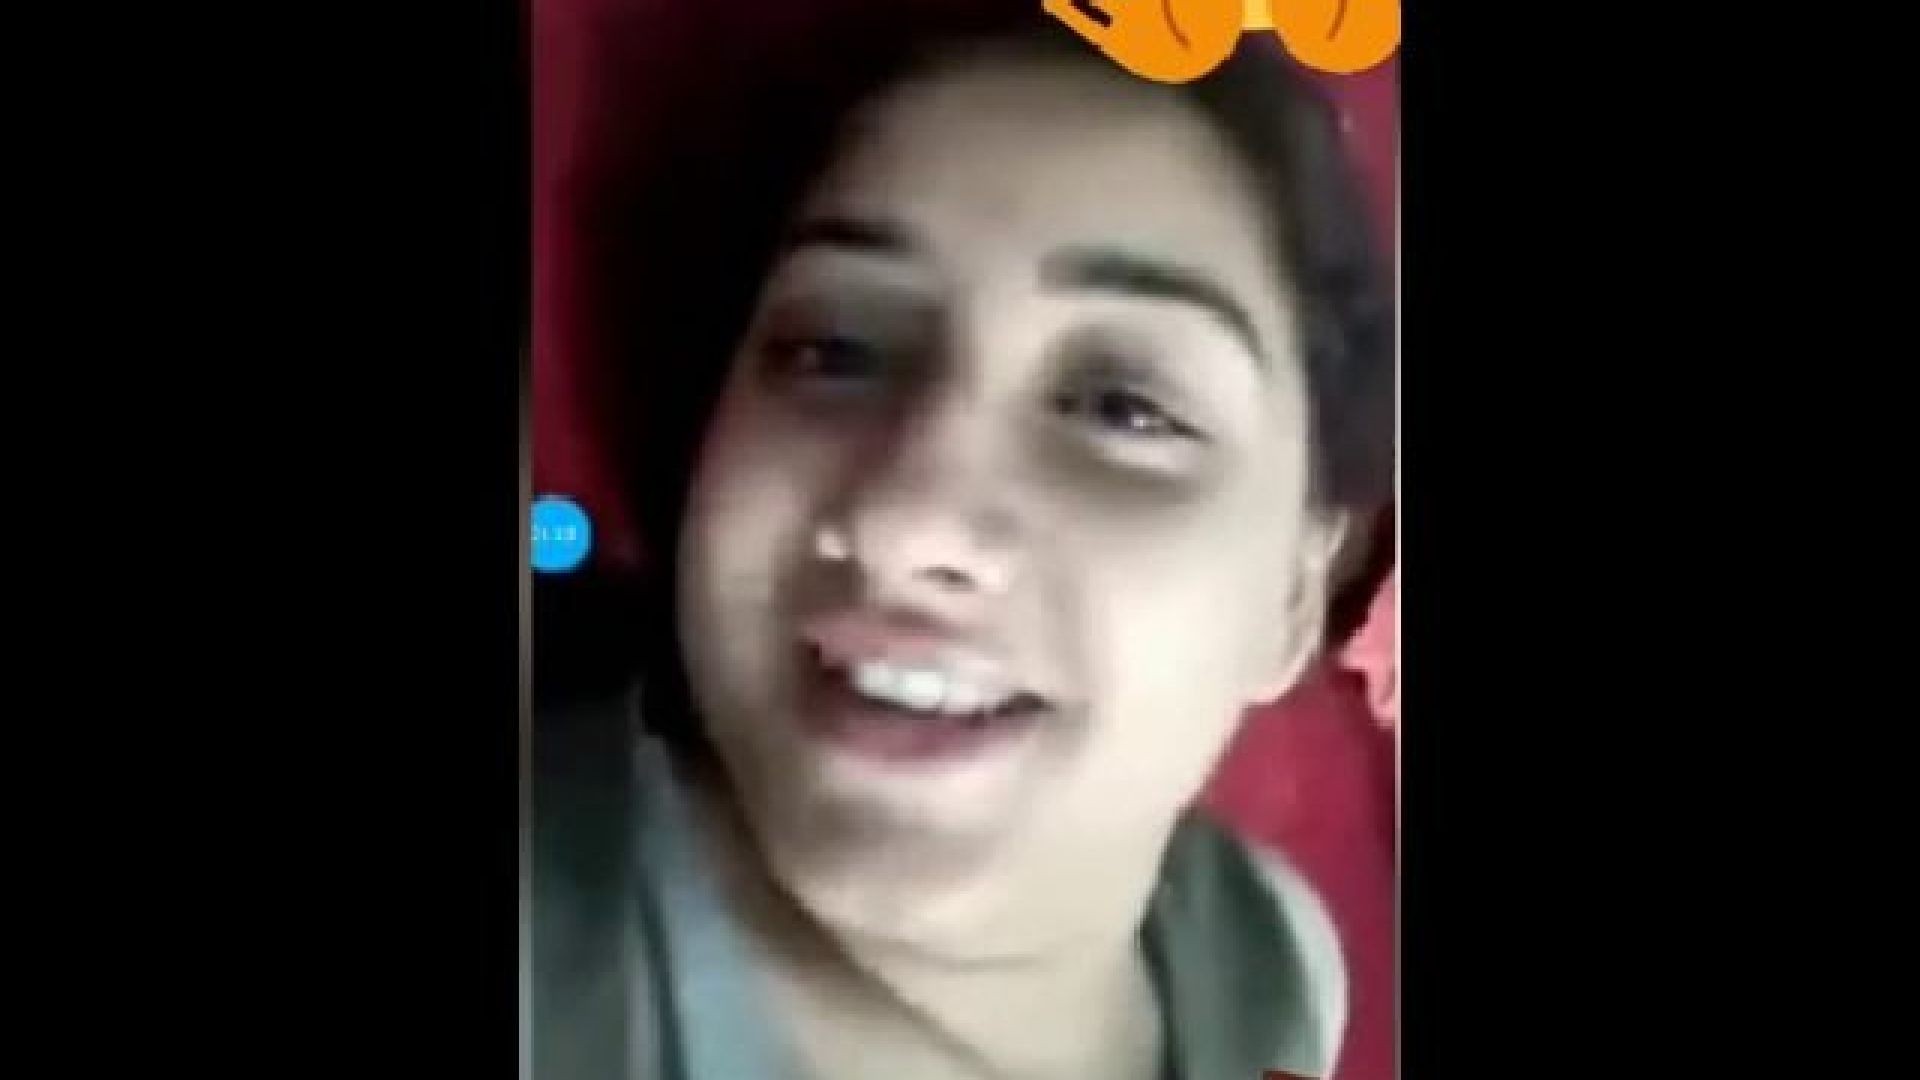 Shy Paki Girl Showing Pussy